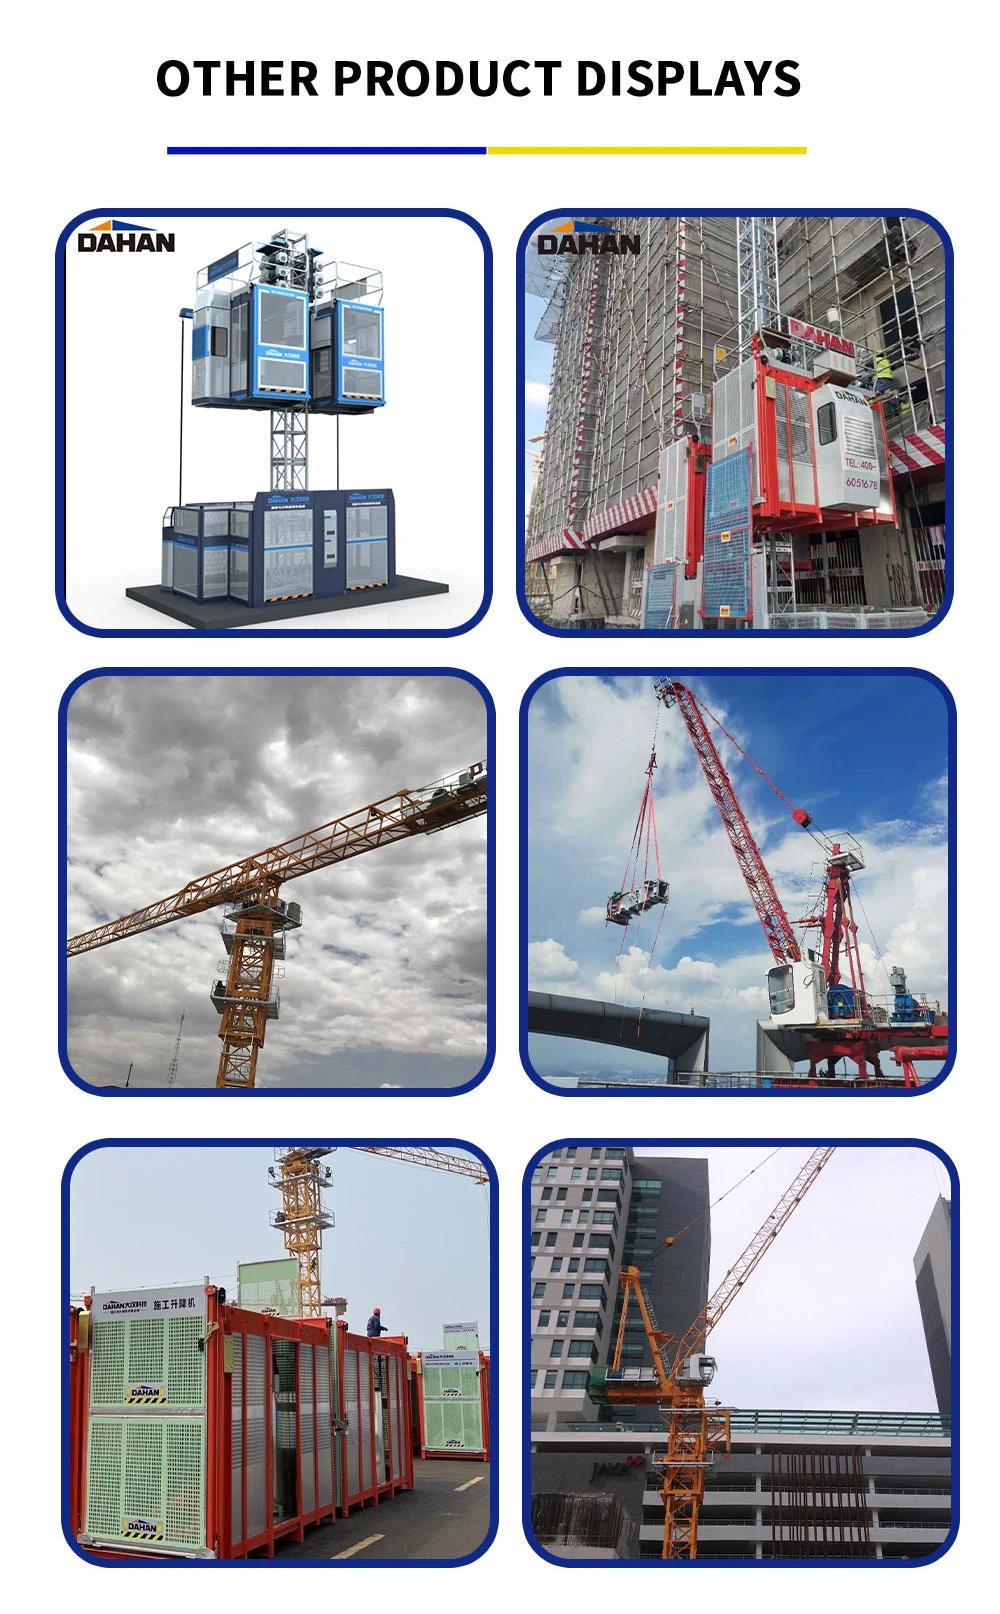 Hot Sale Building Construction Tower Cap Tower Crane Construction Equipment